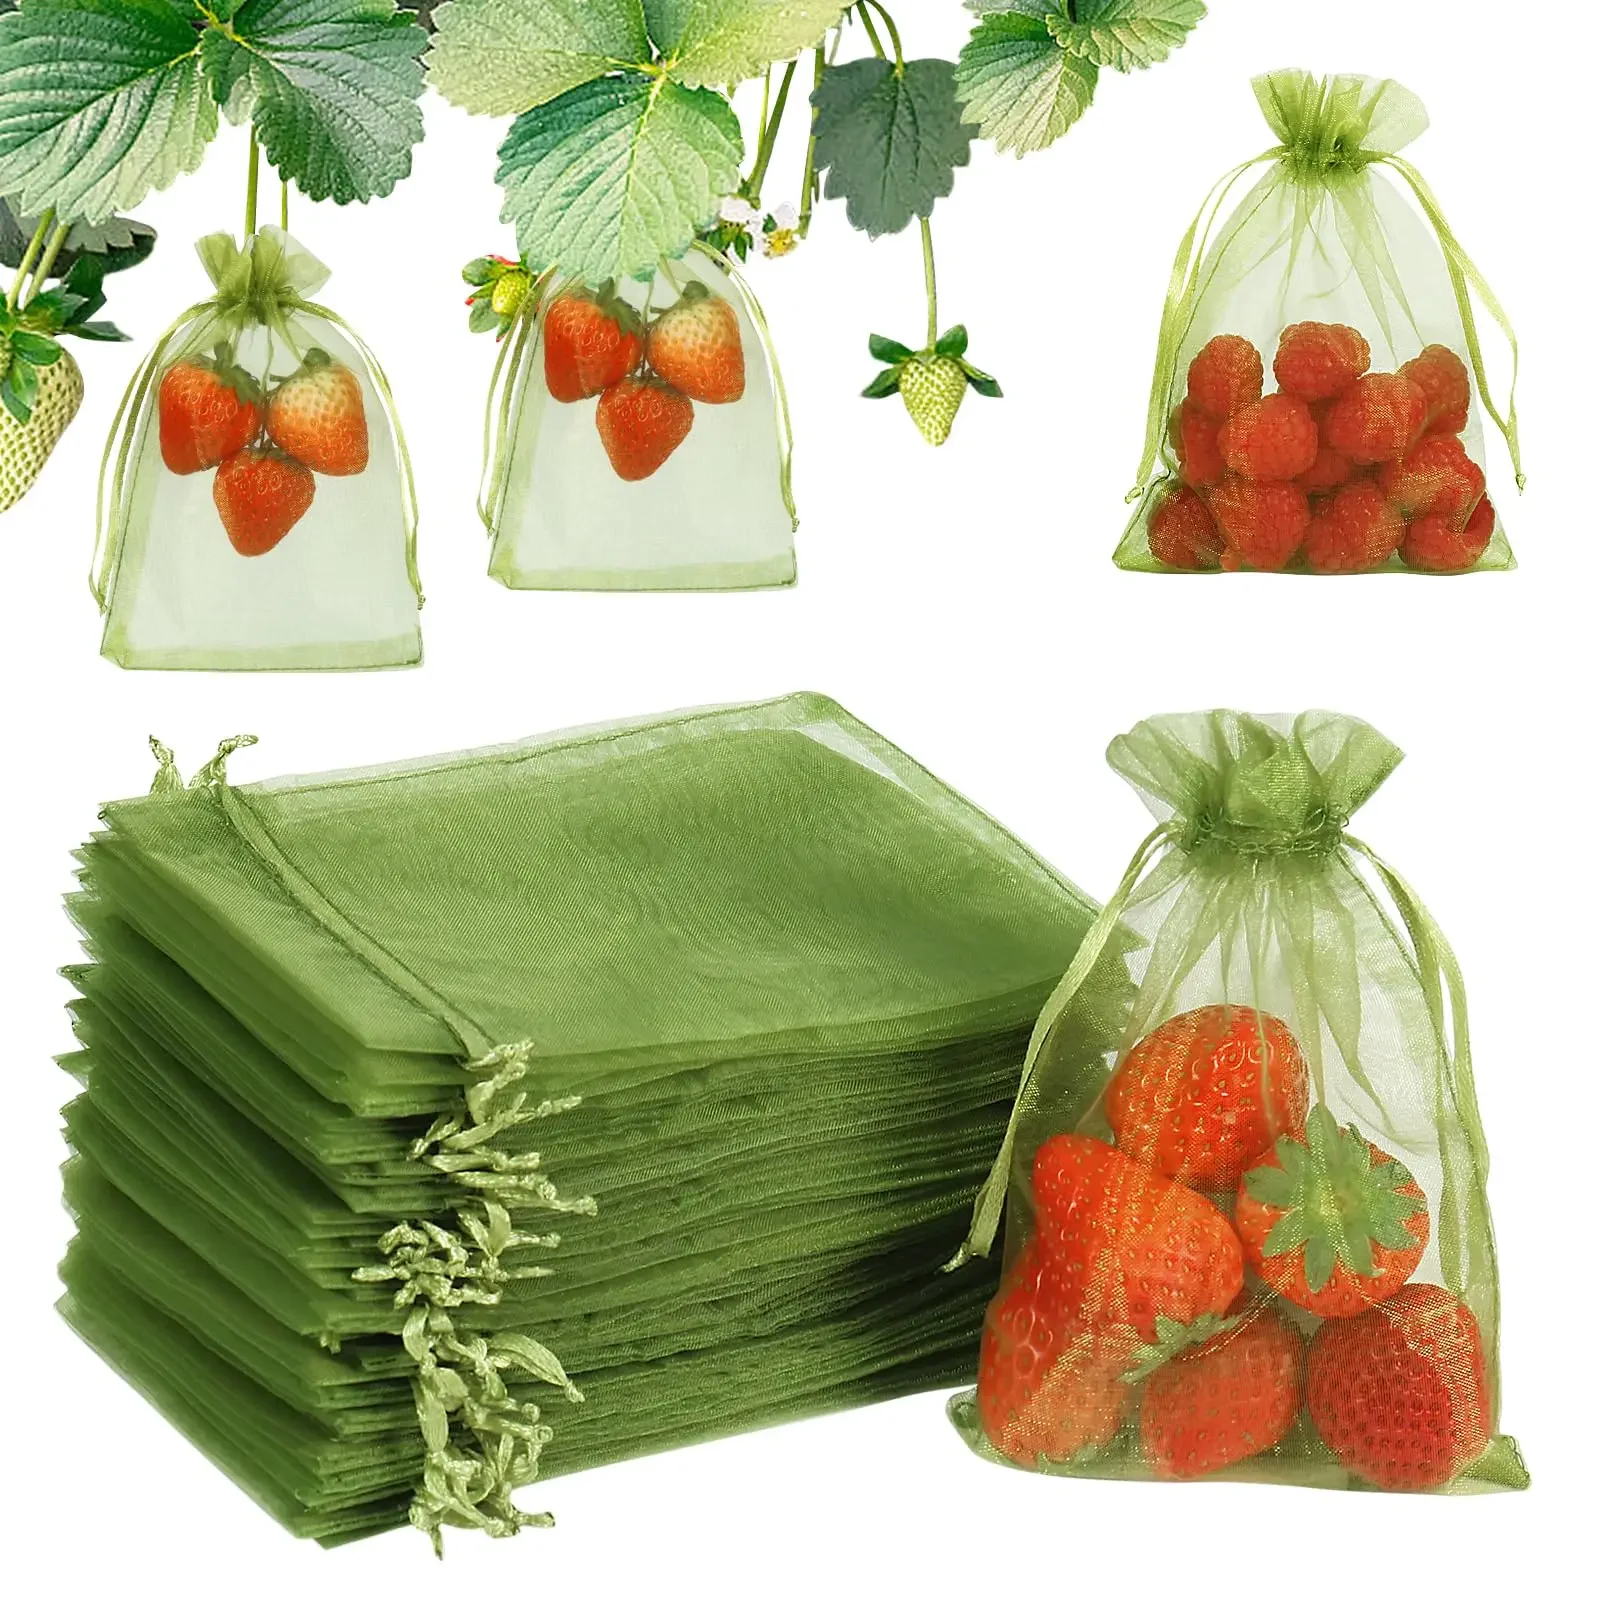 Fruit Protection Bags 50/100Pcs Garden Fruit Netting Bags With Drawstring Plant Cover Mesh Bag for Plant Fruit Flower Vegetables